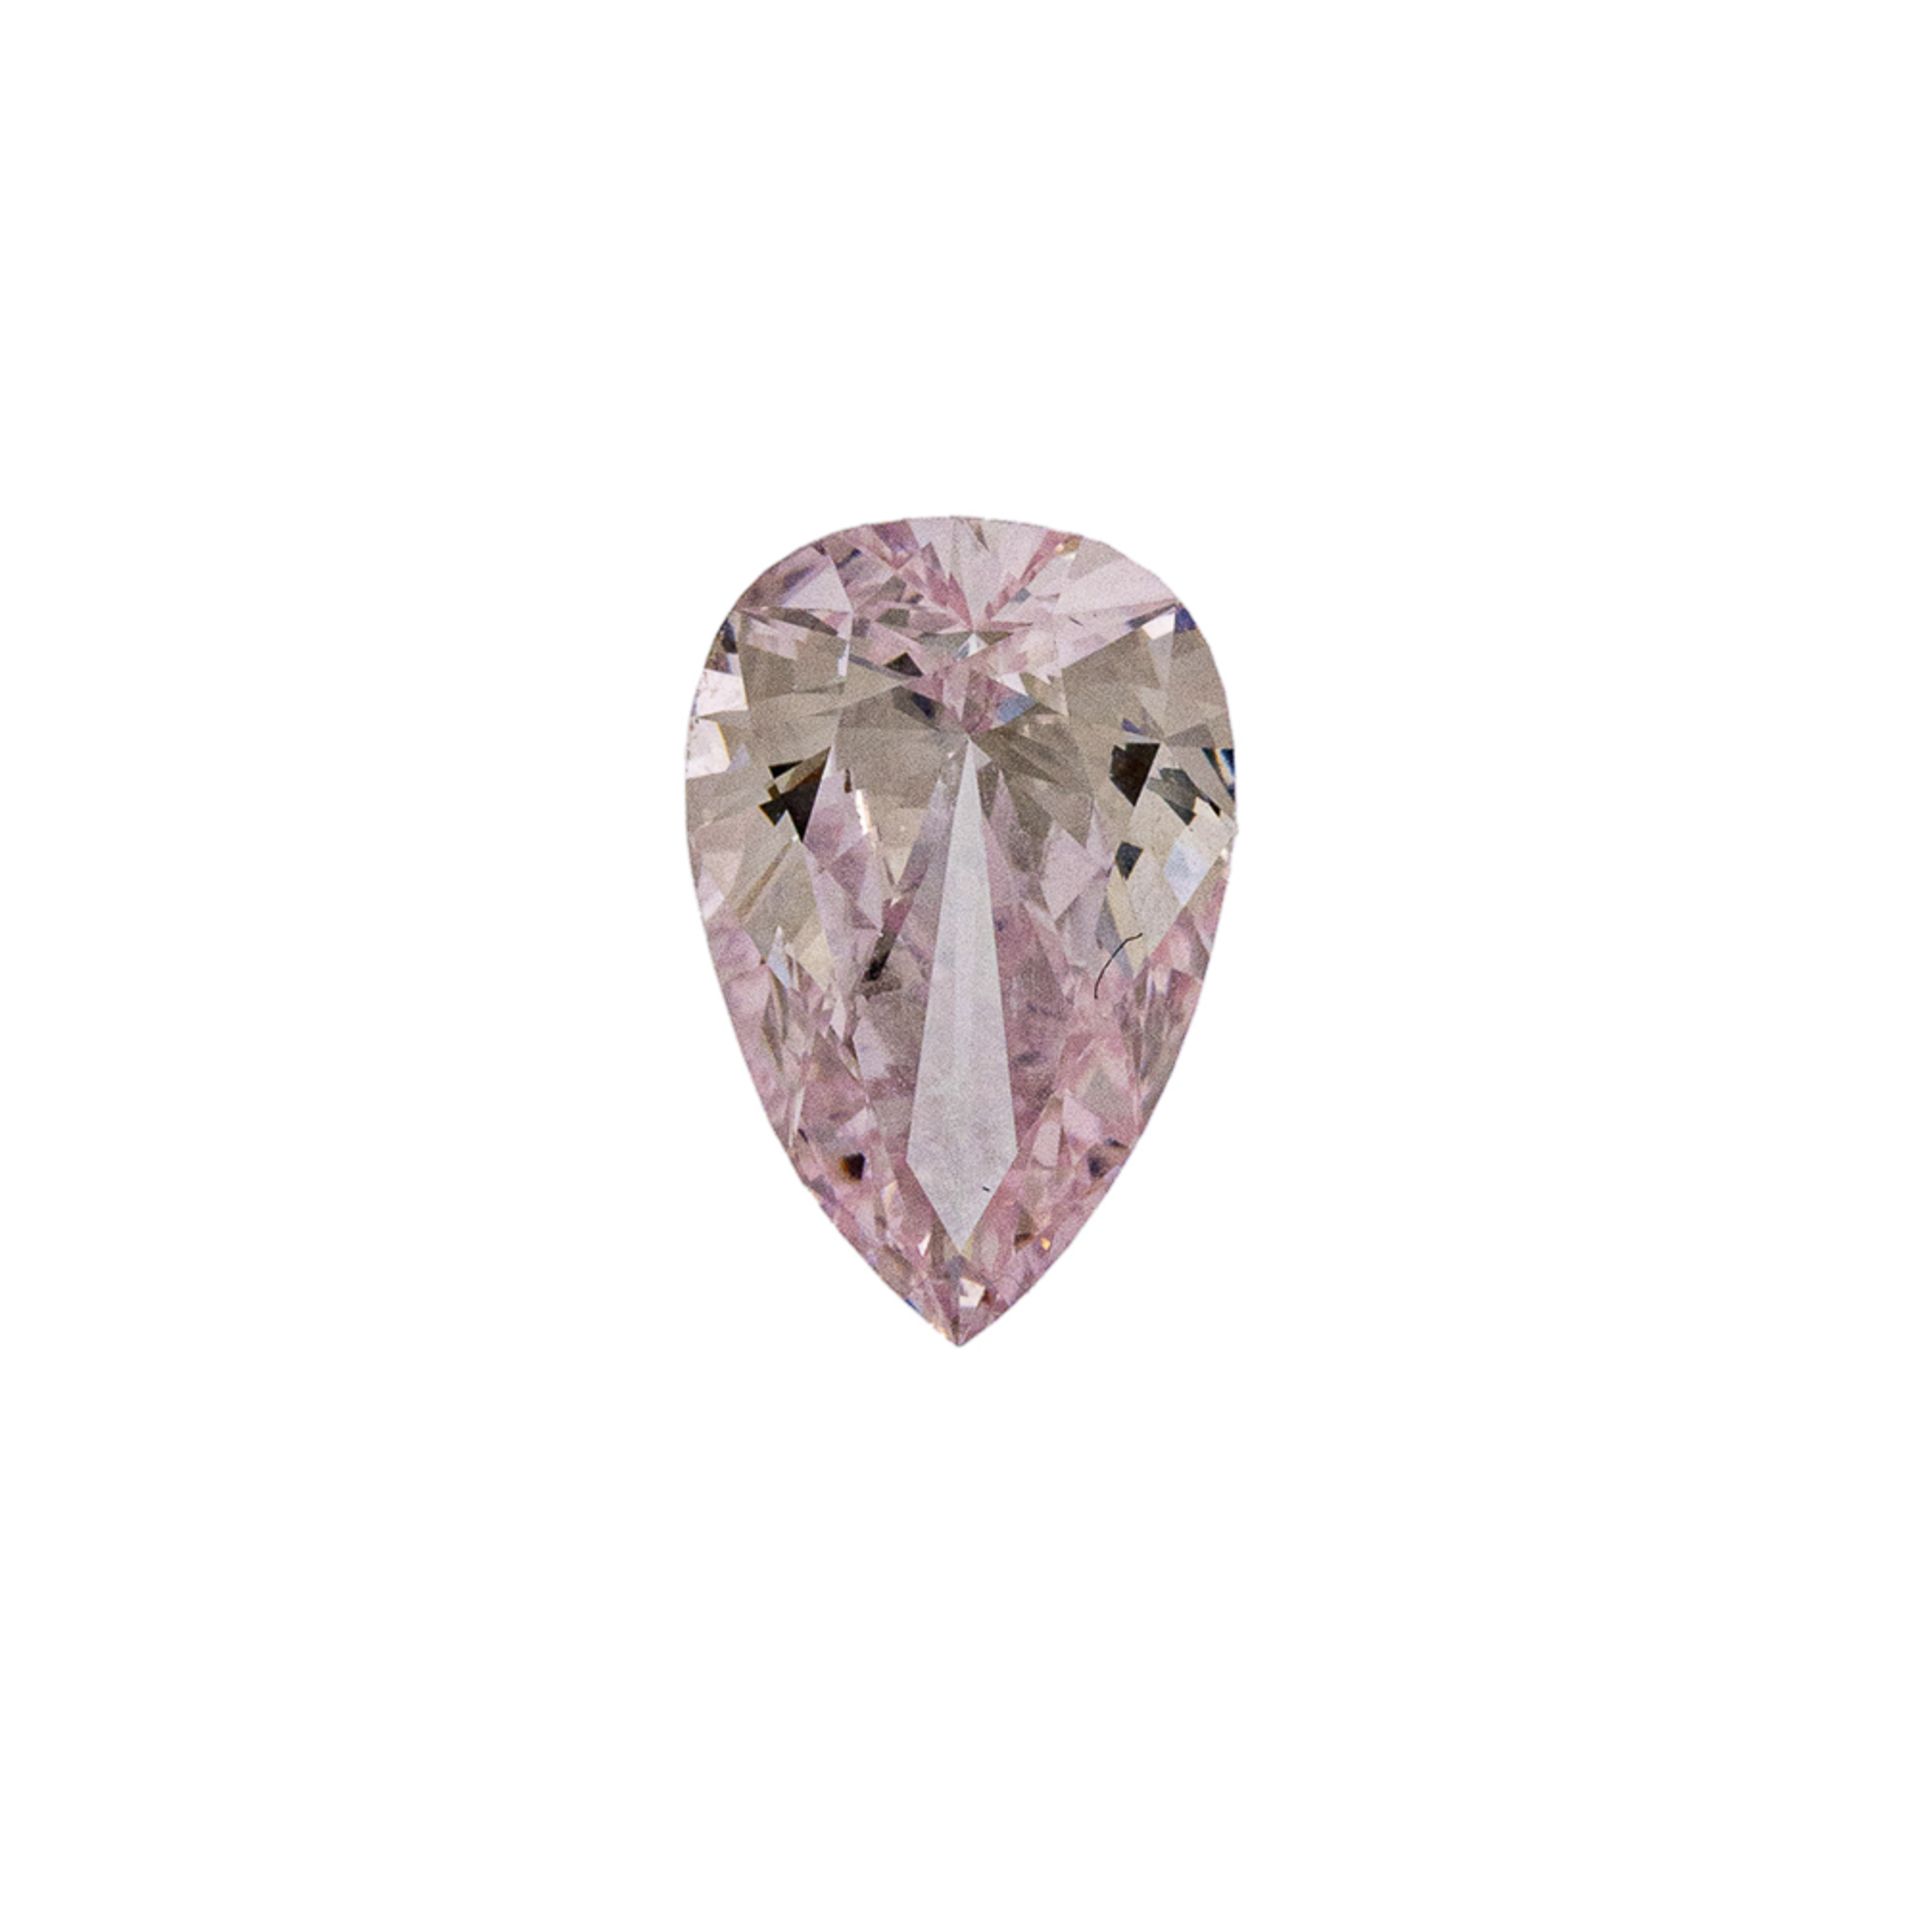 Mario Buccellati ring with natural pink diamond - Image 4 of 4